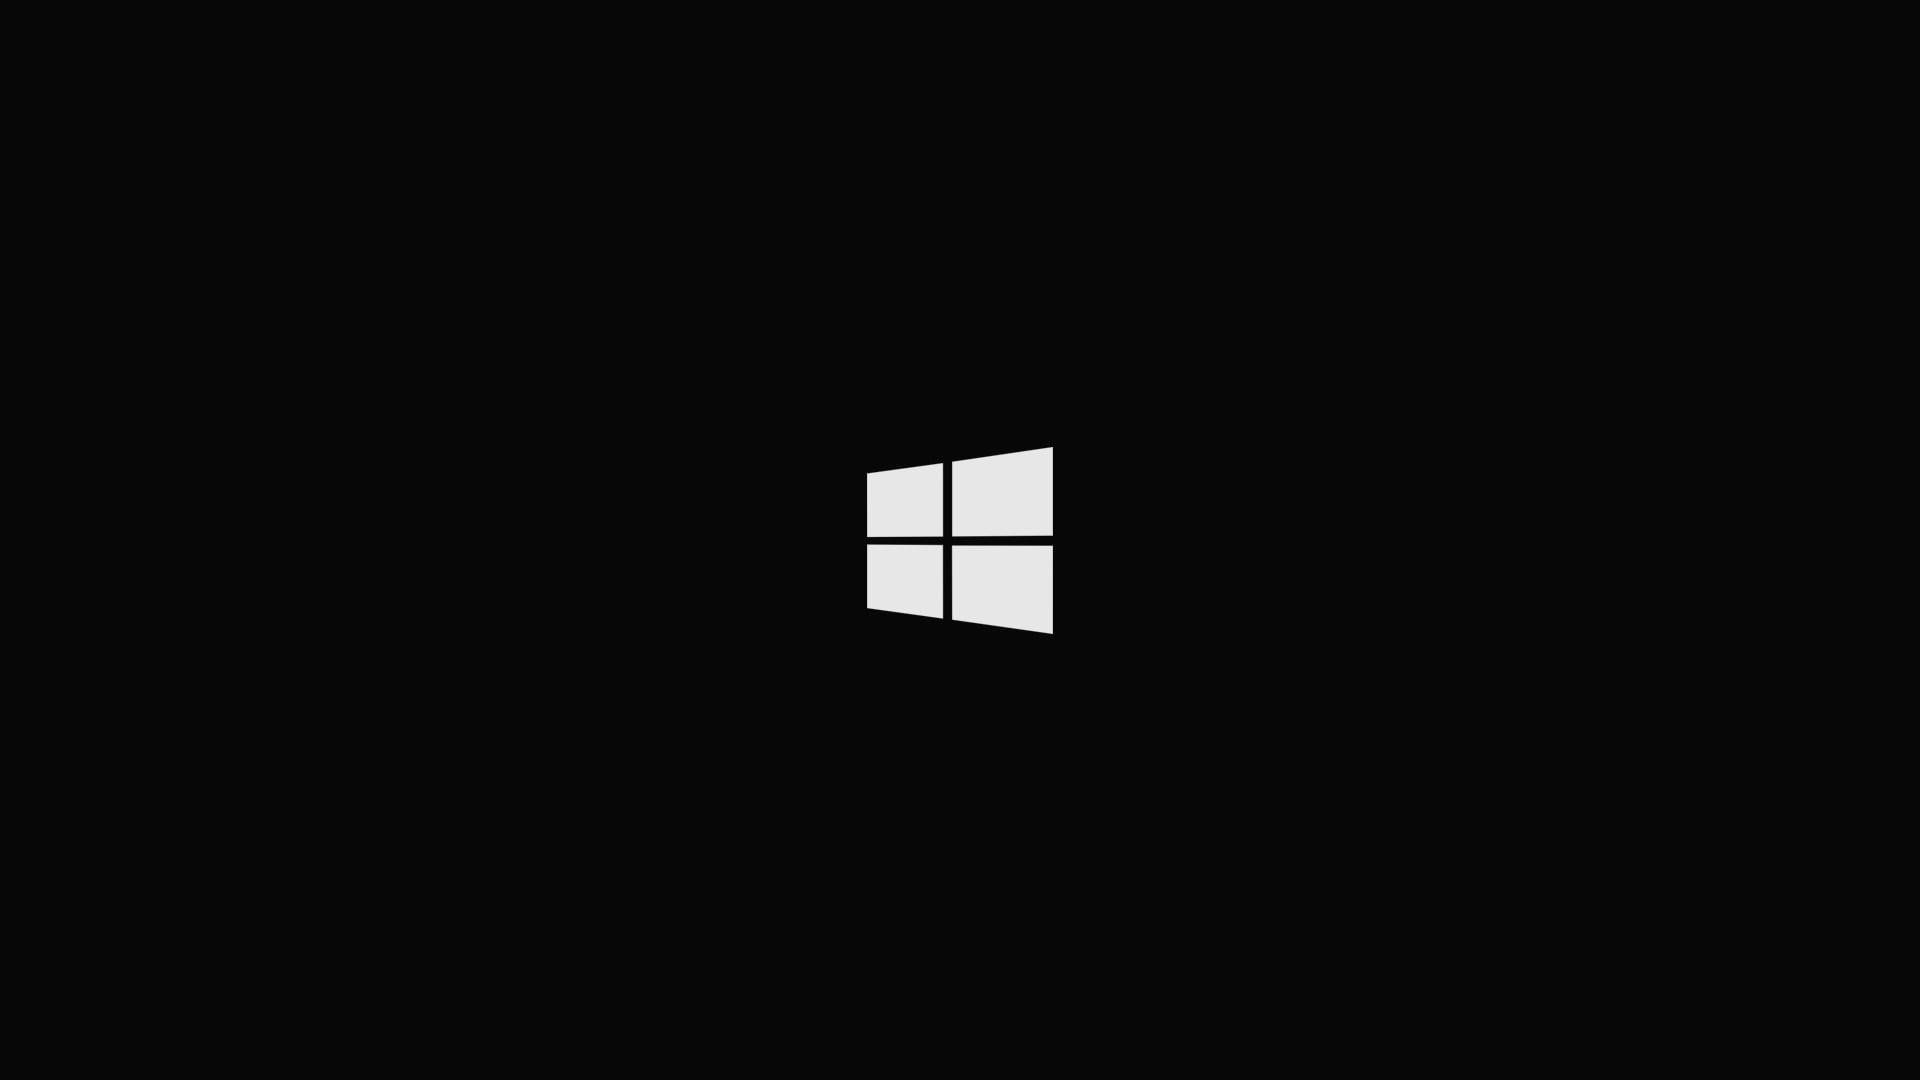 Black Windows 10 Hd Minimalist Background Wallpaper